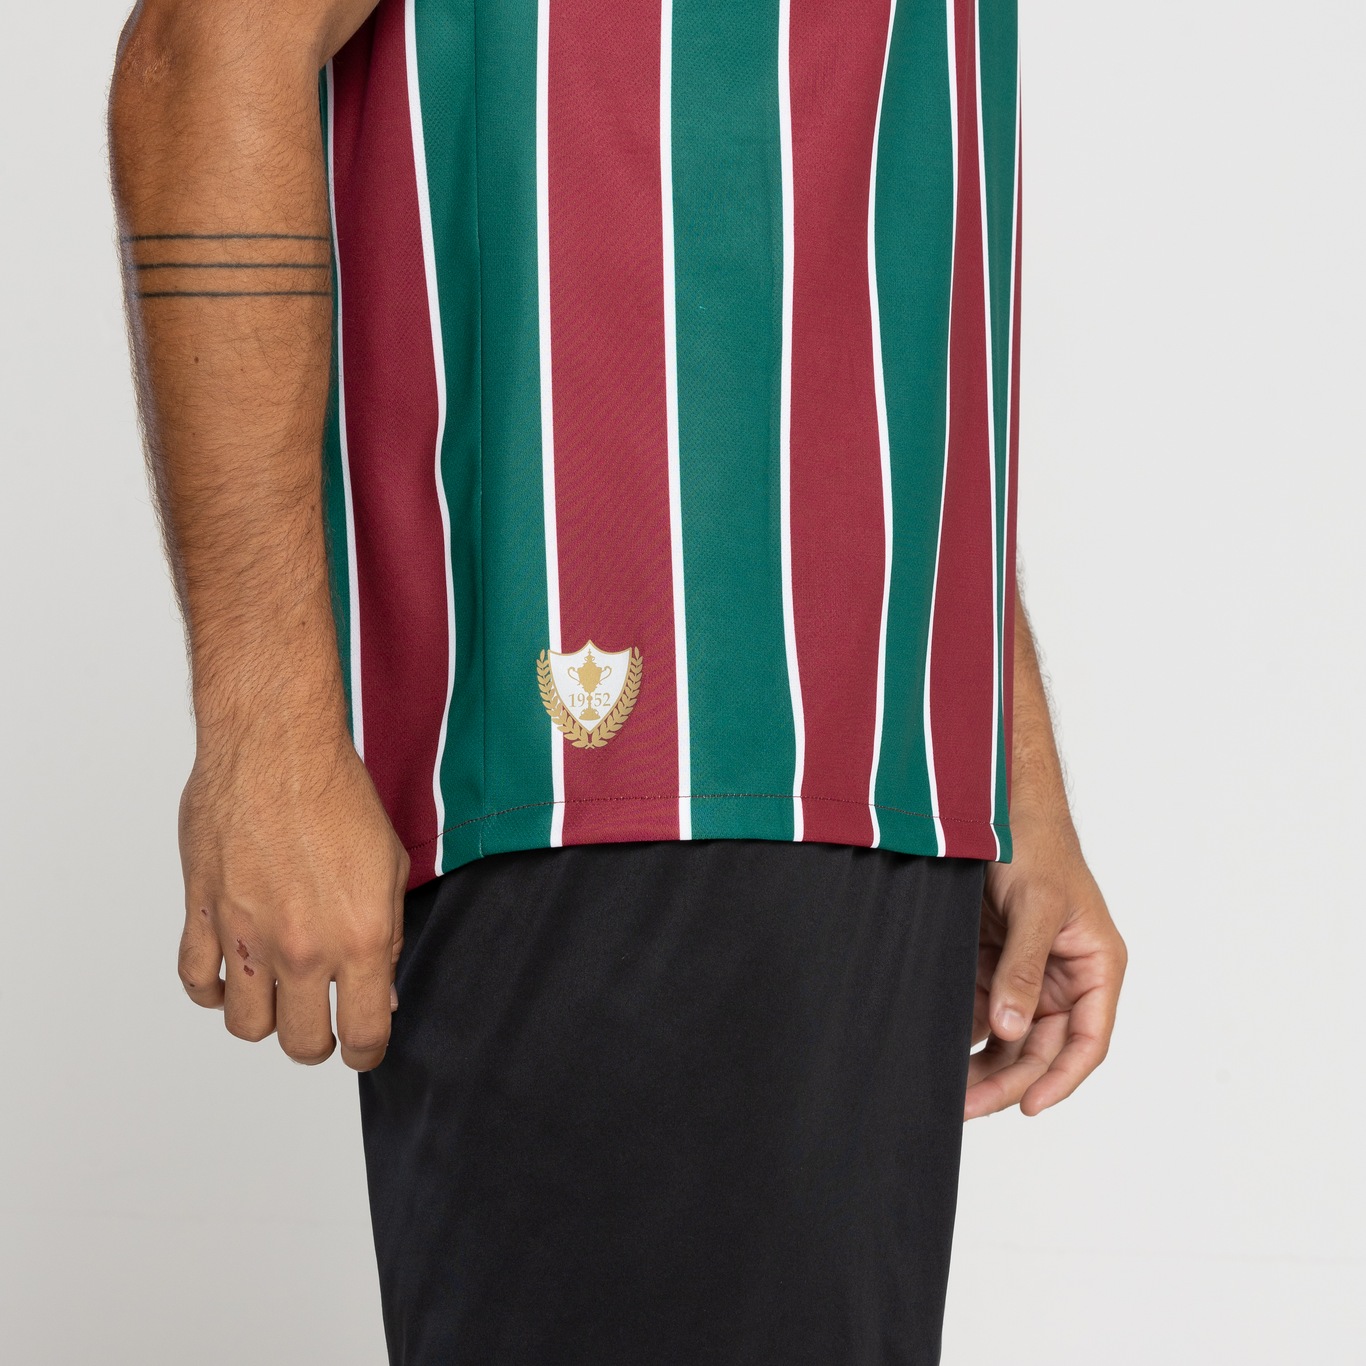 Camisa do Fluminense I 23 Masculina Umbro  - Foto 5